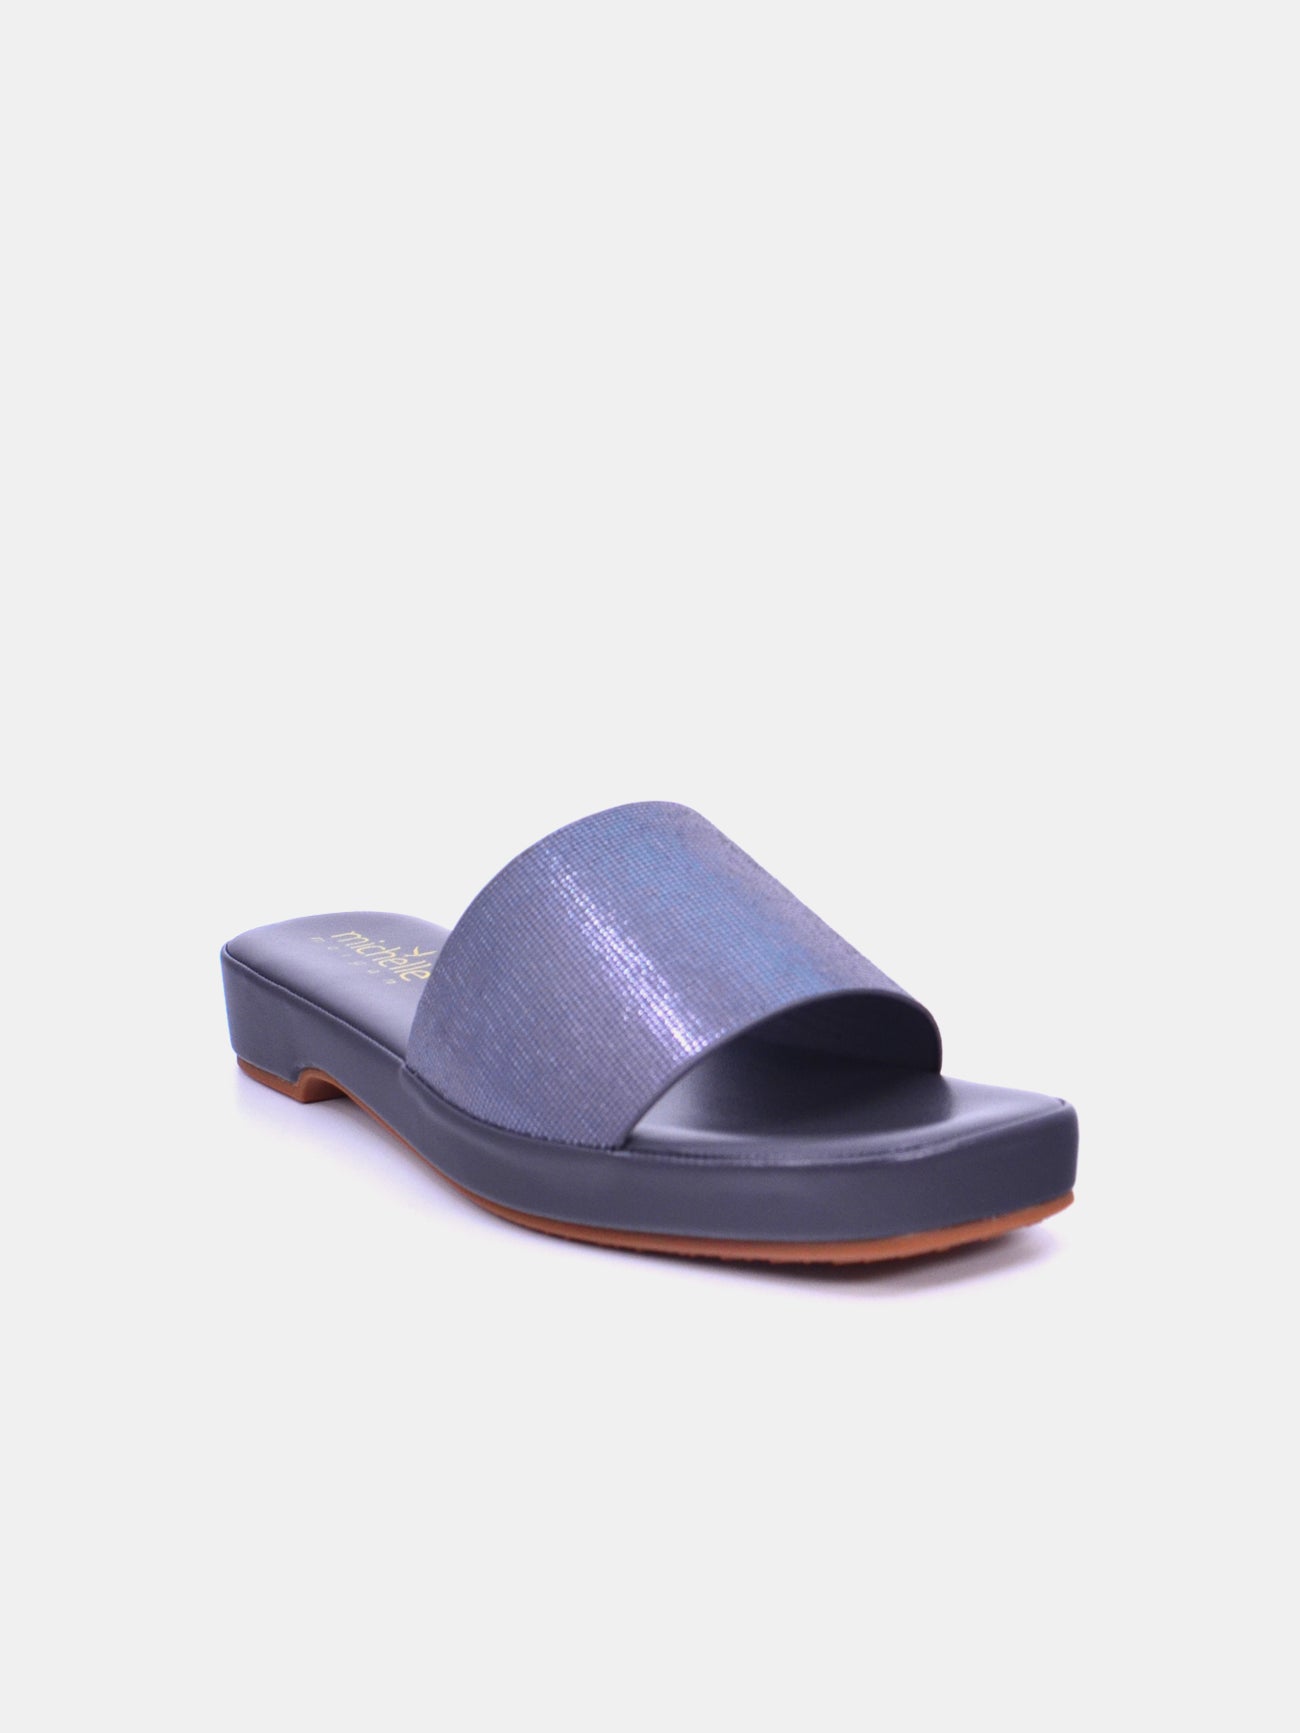 Michelle Morgan 114RJ93I Women's Heeled Sandals #color_Grey